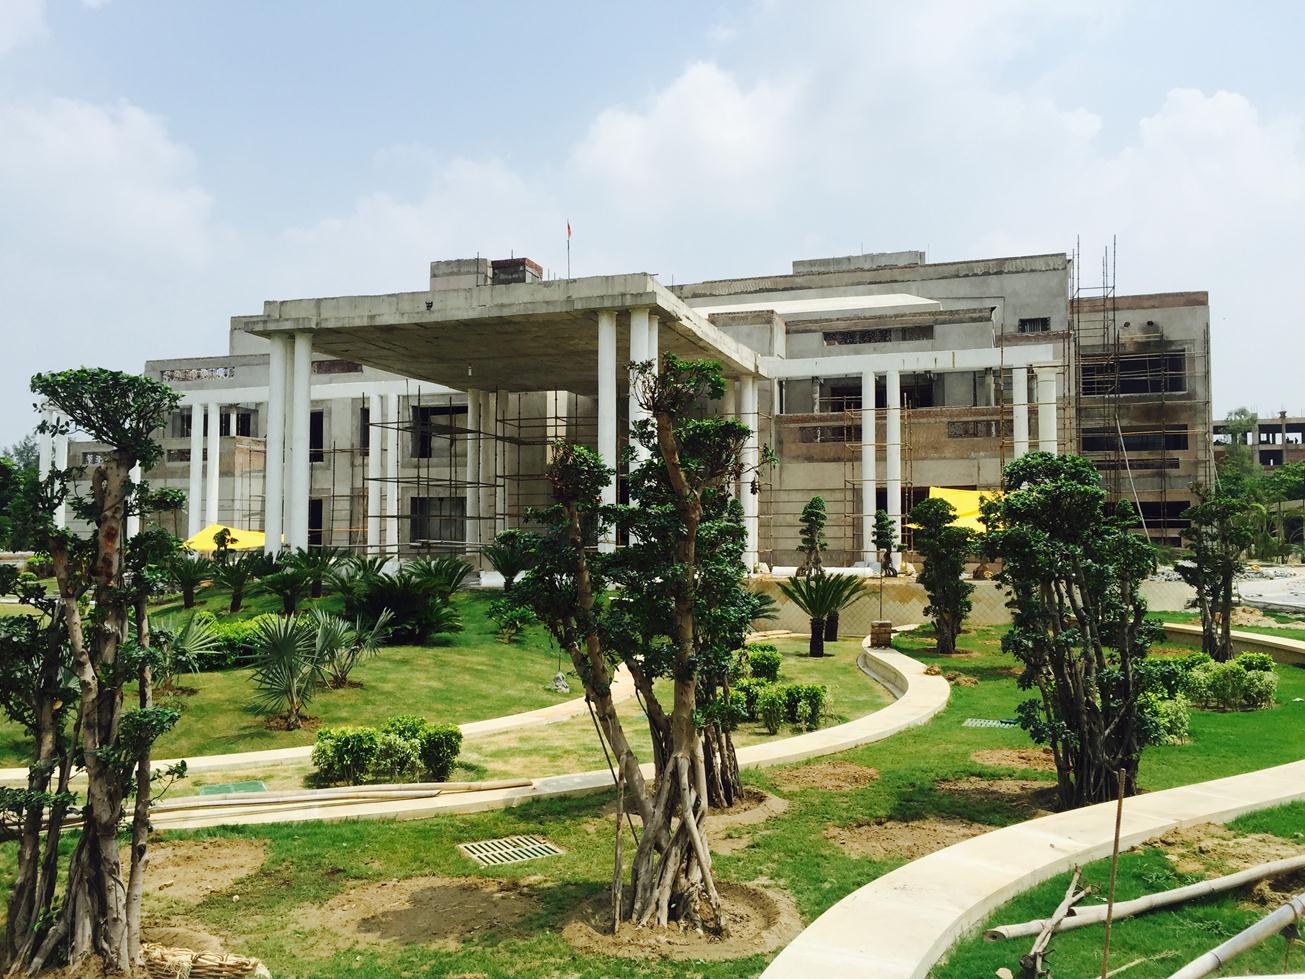 Residence, Greater Noida, UP